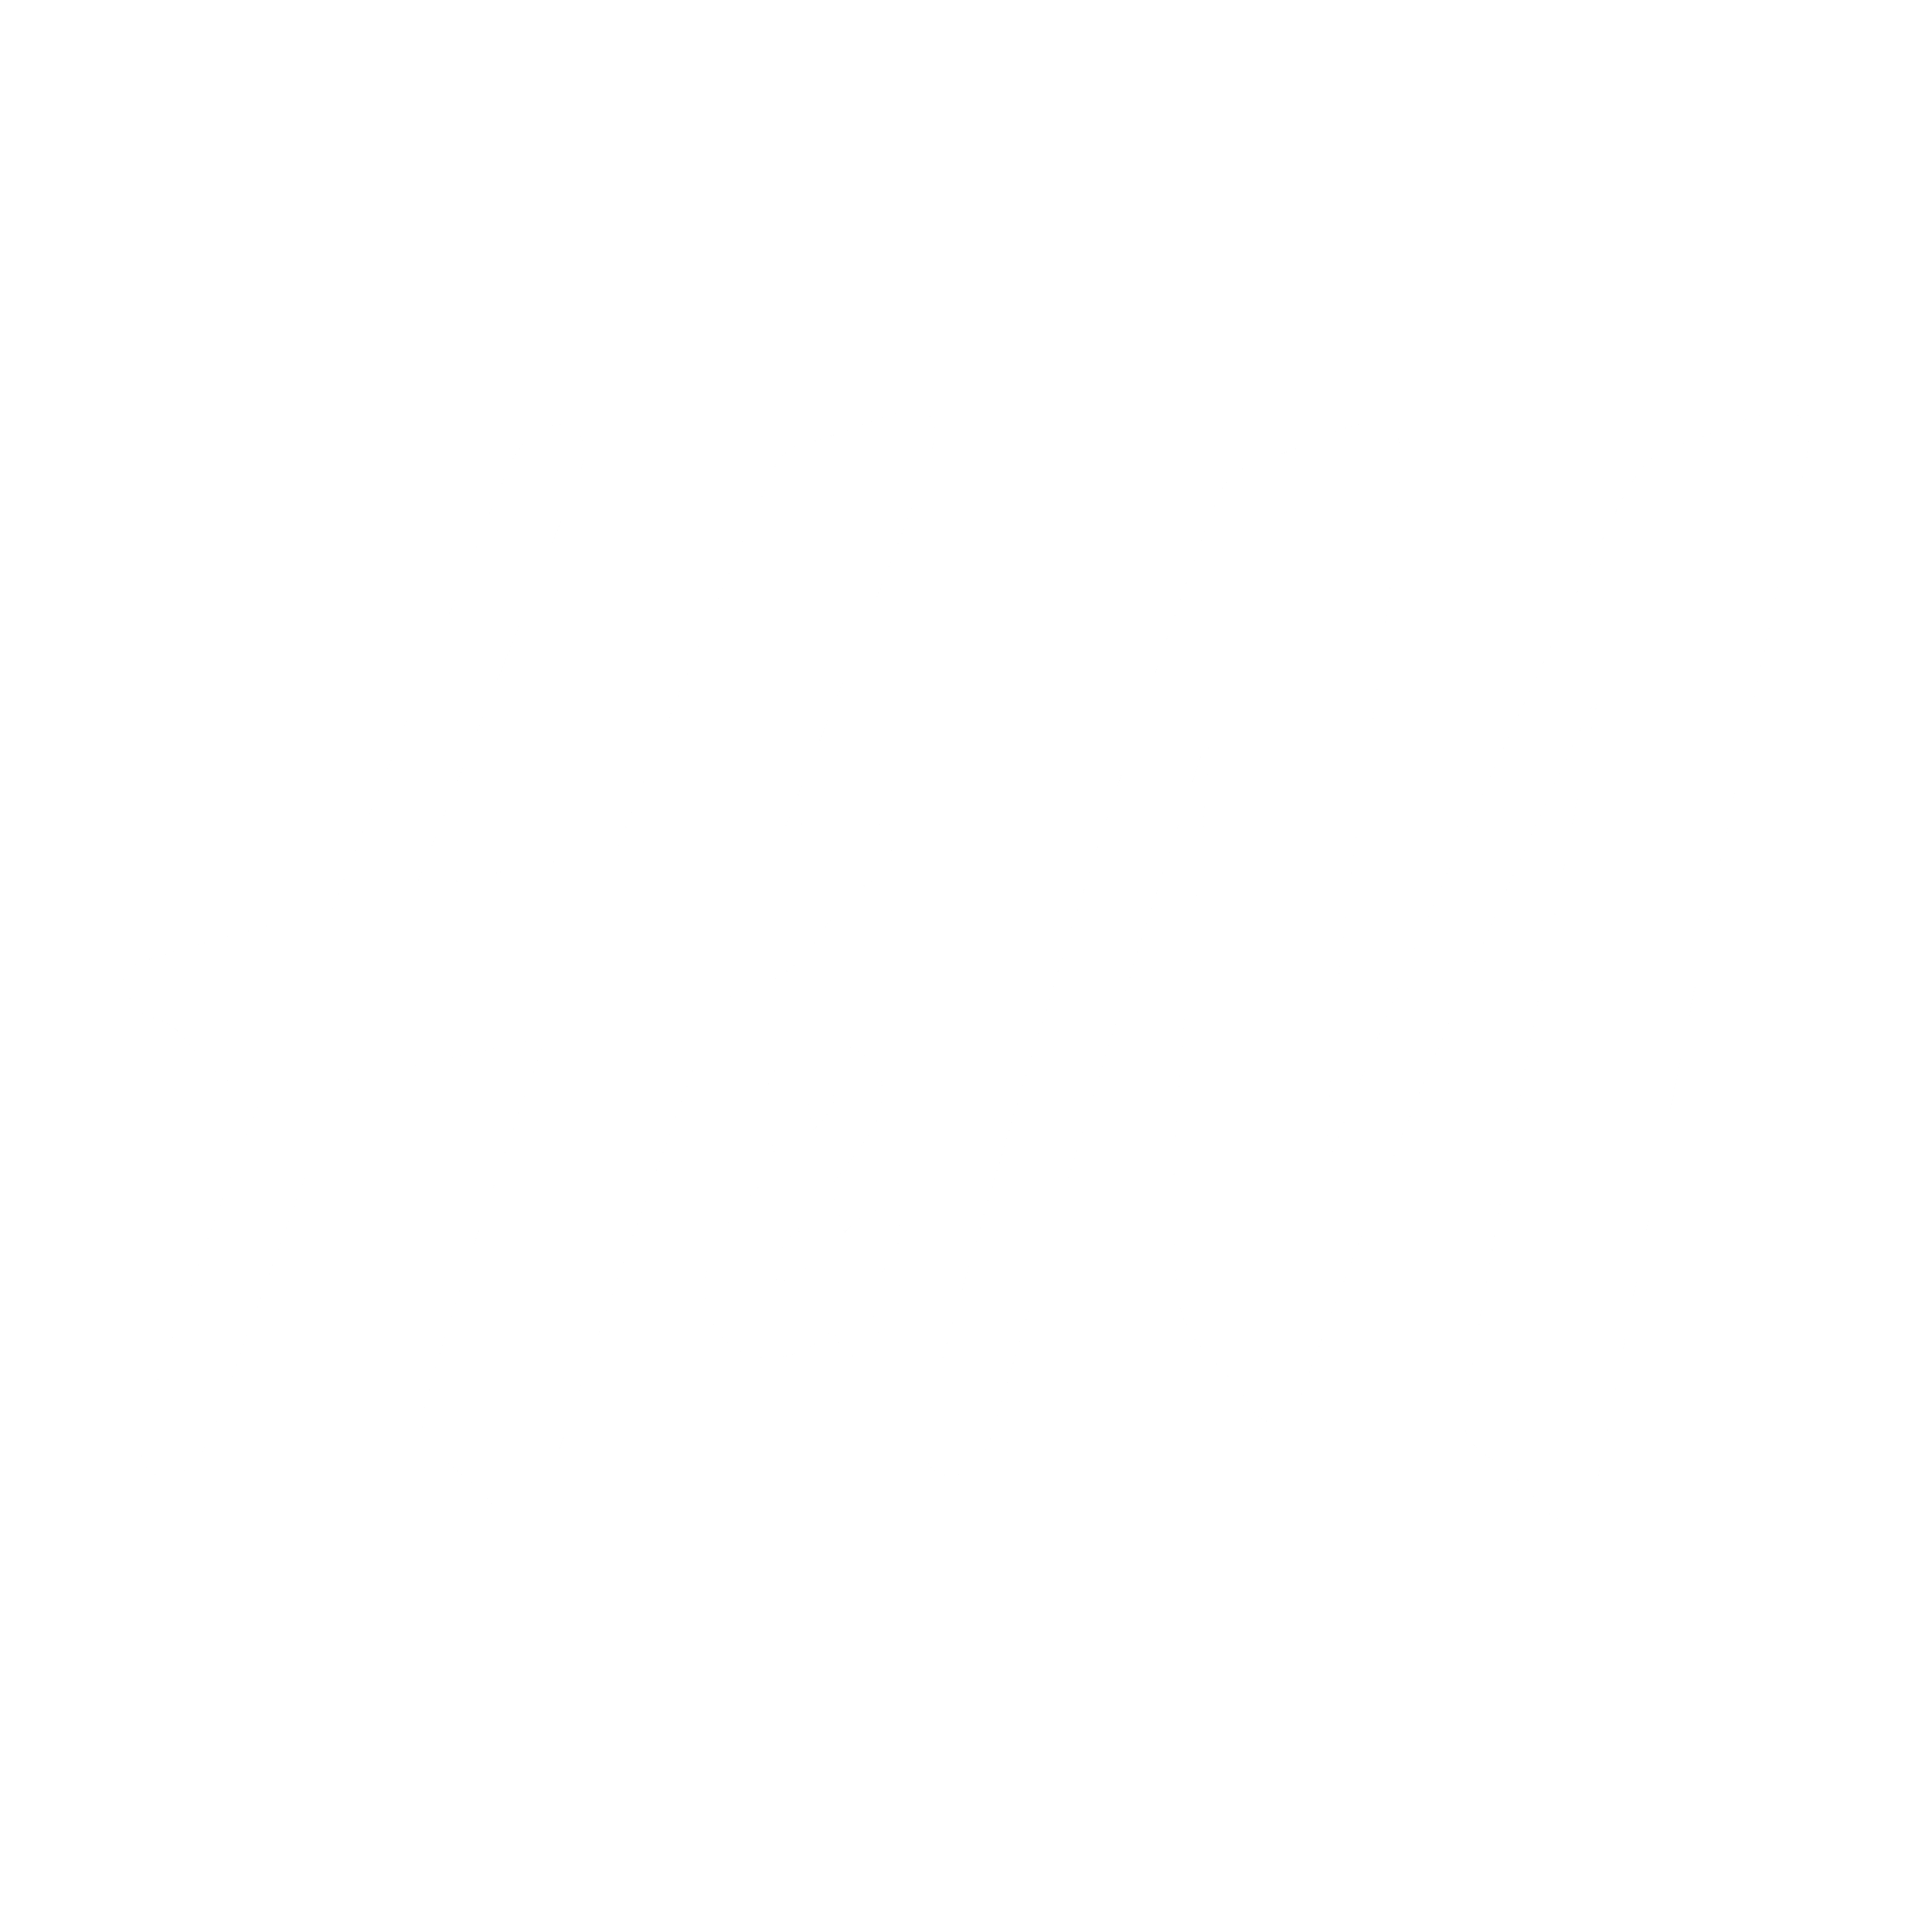 H&M Logo PNG Images